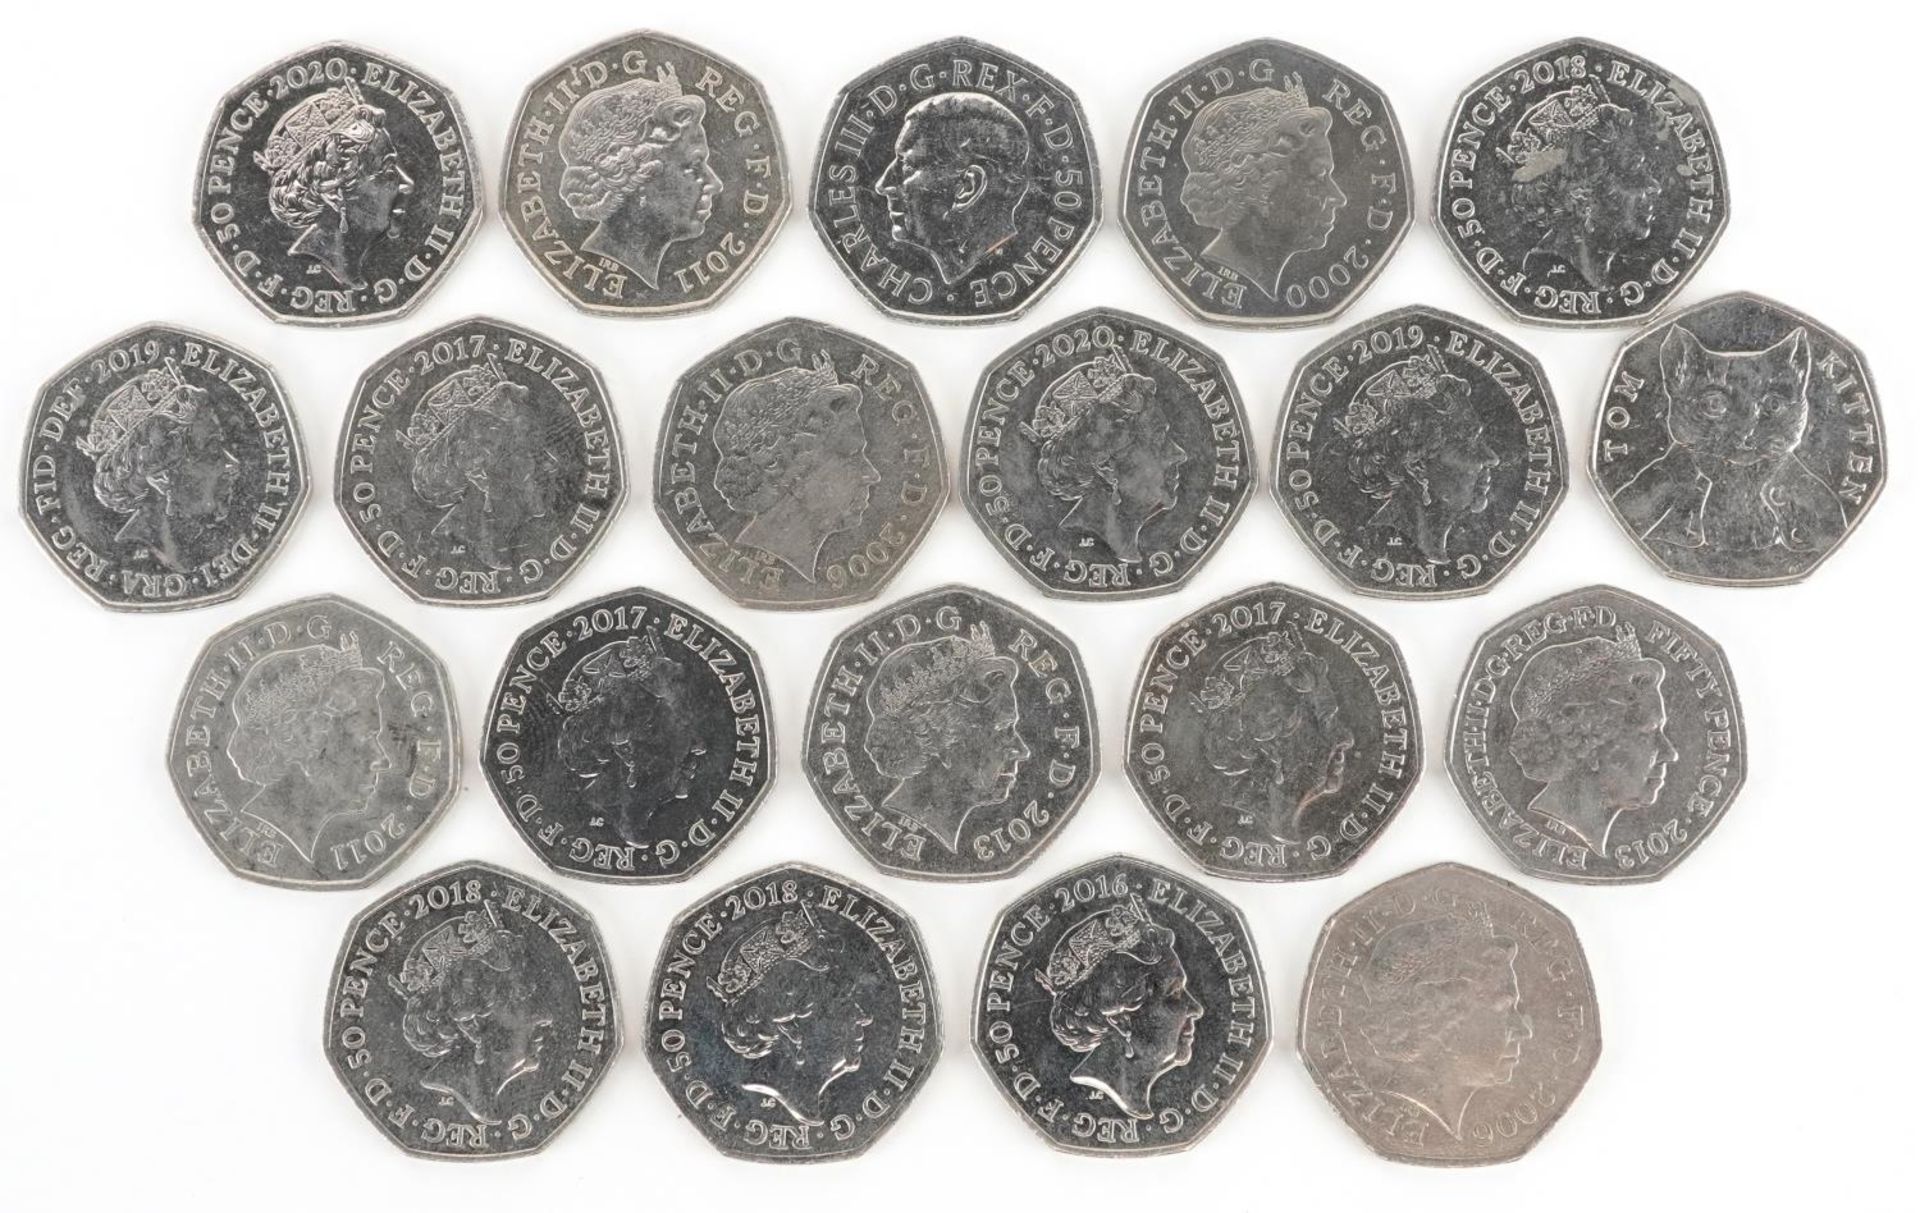 Twenty Elizabeth II fifty pence pieces, various designs including London 2012 Olympics and - Bild 4 aus 6